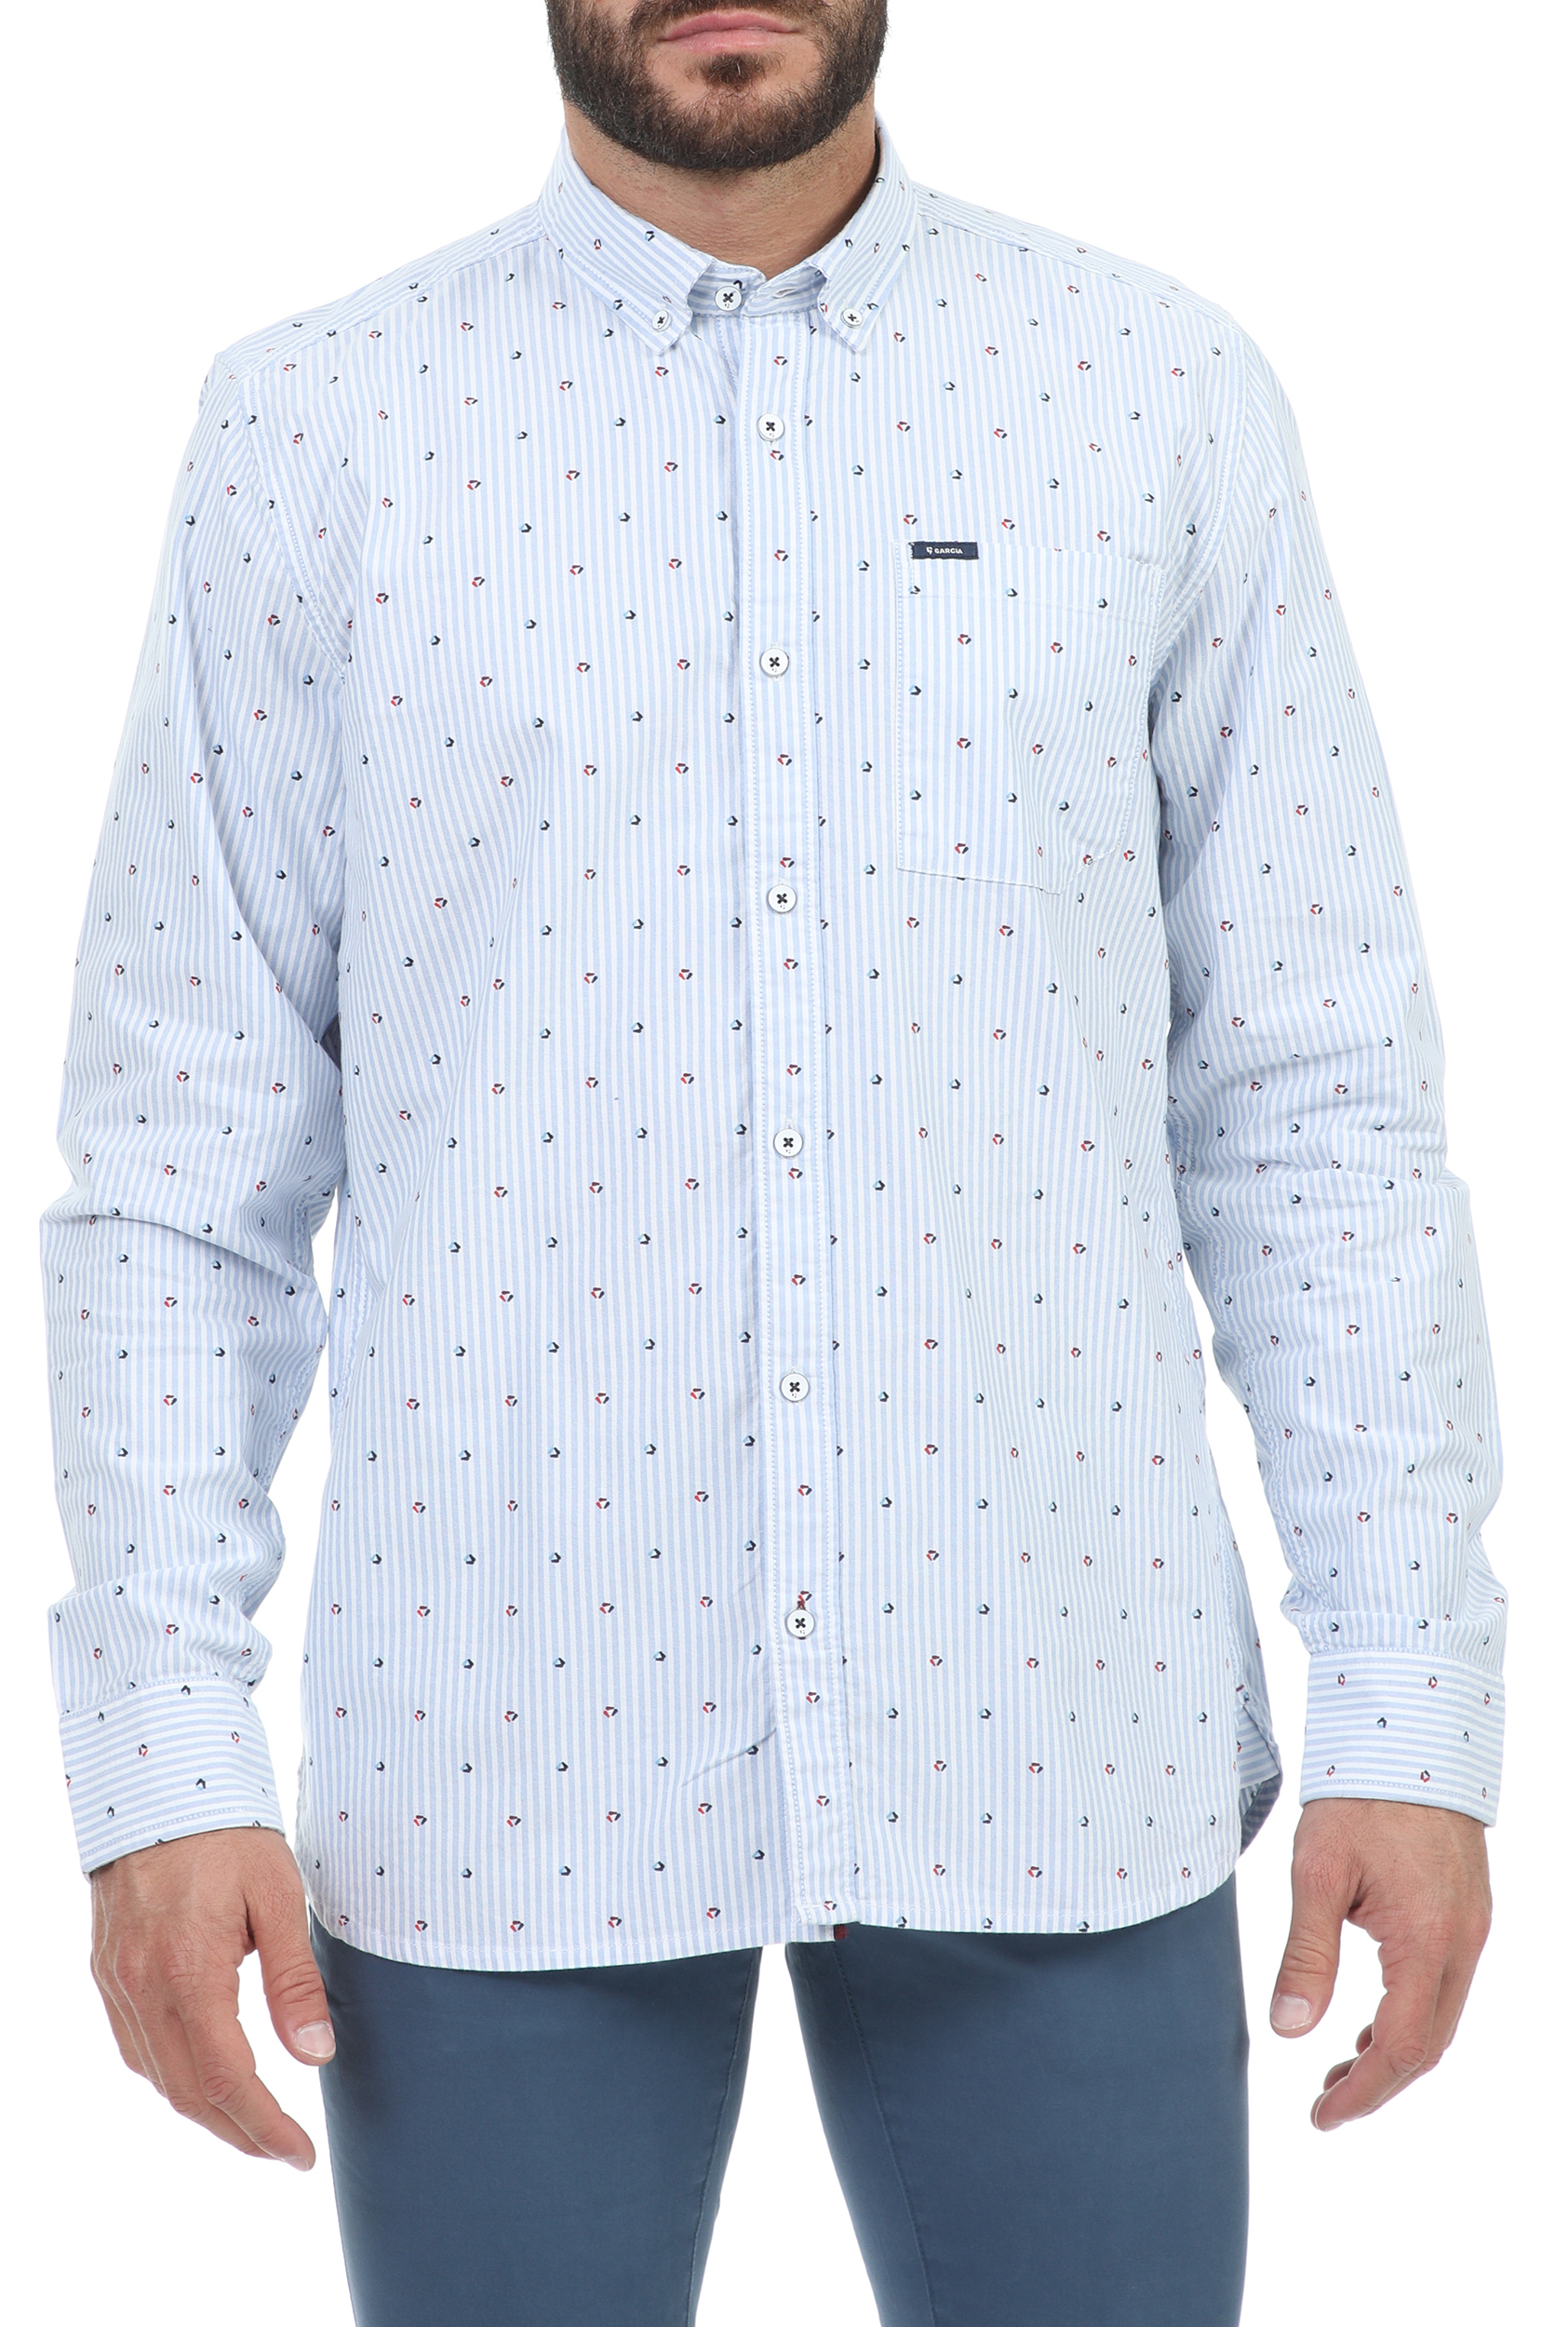 GARCIA JEANS – Ανδρικό πουκάμισο GARCIA JEANS μπλε λευκό 1794989.0-0021